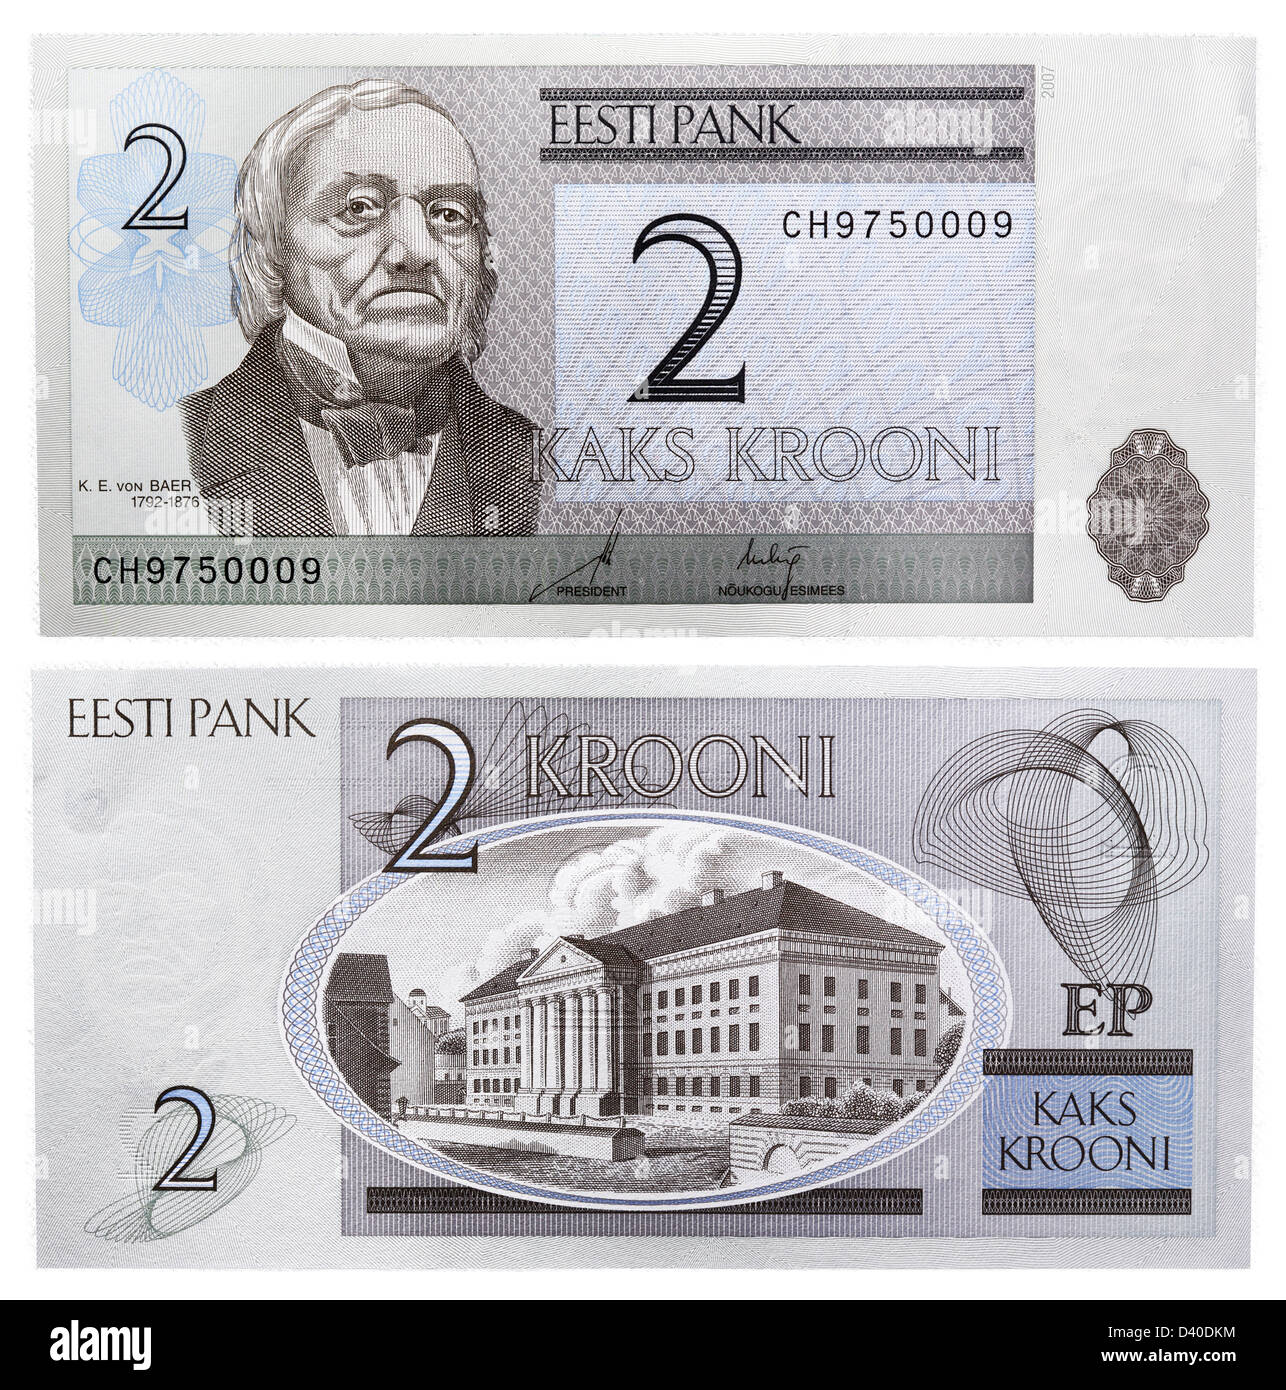 2 Krooni banknote, K. E. von Baer and Tartu University building, Estonia, 1992 Stock Photo